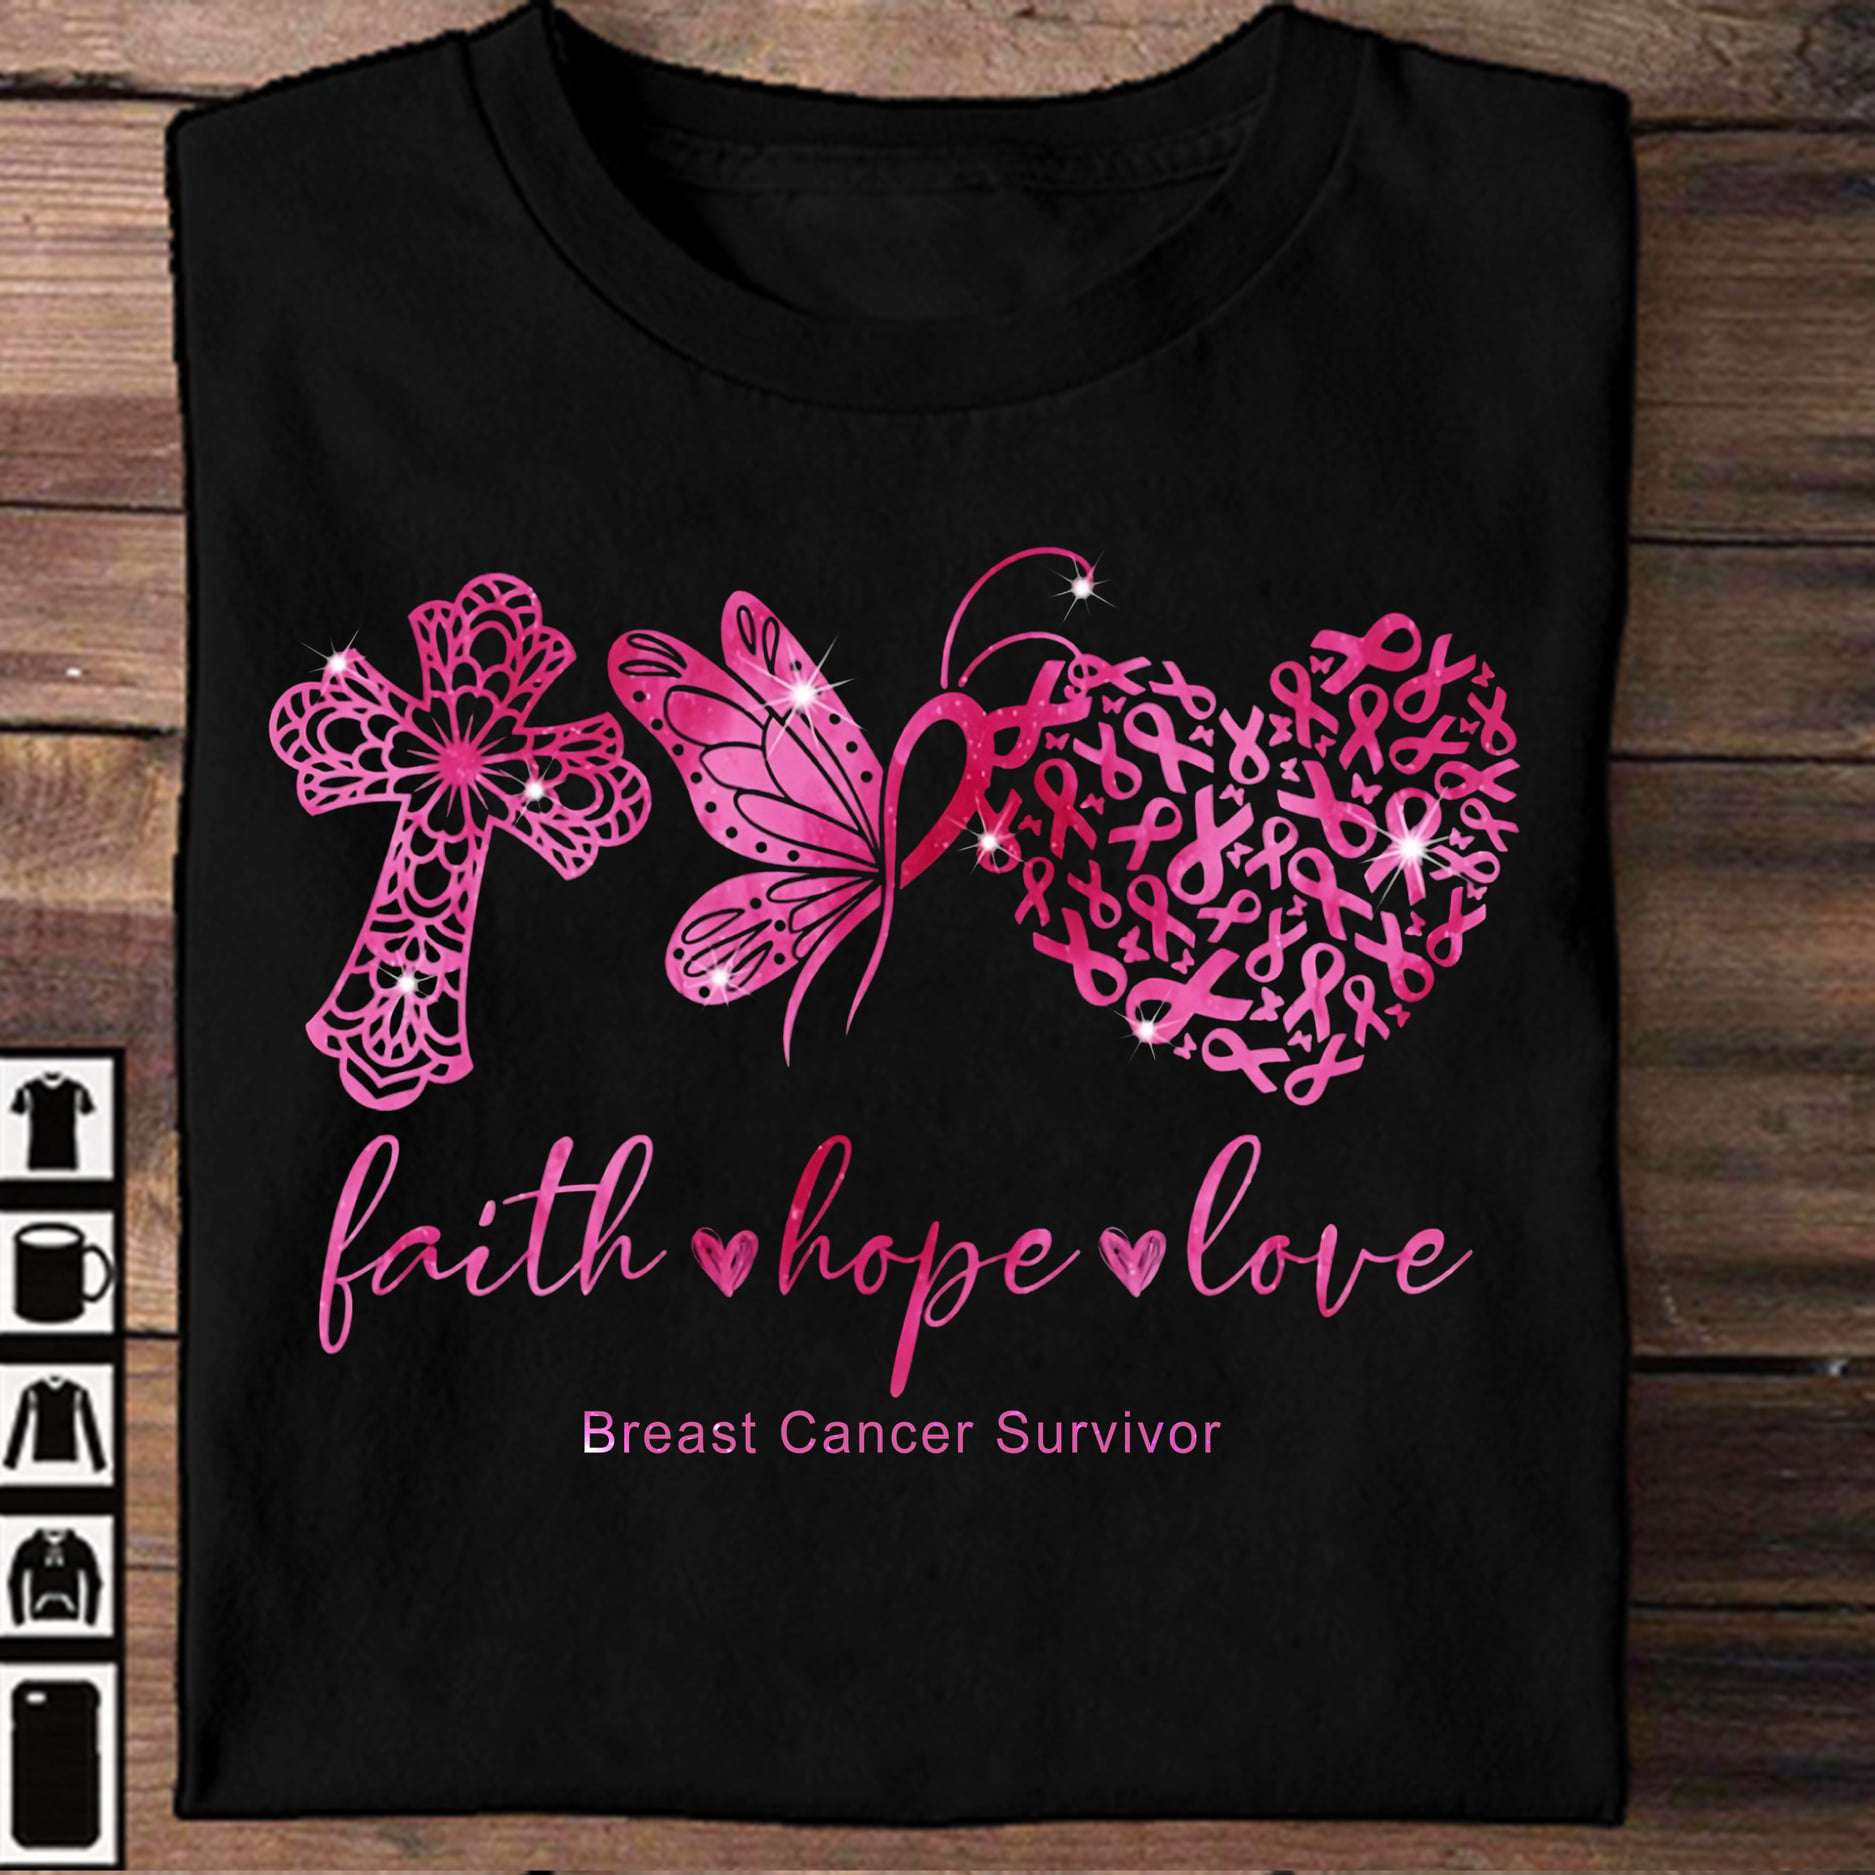 Faith hope love - Breast cancer survivor, butterflies cancer ribbon